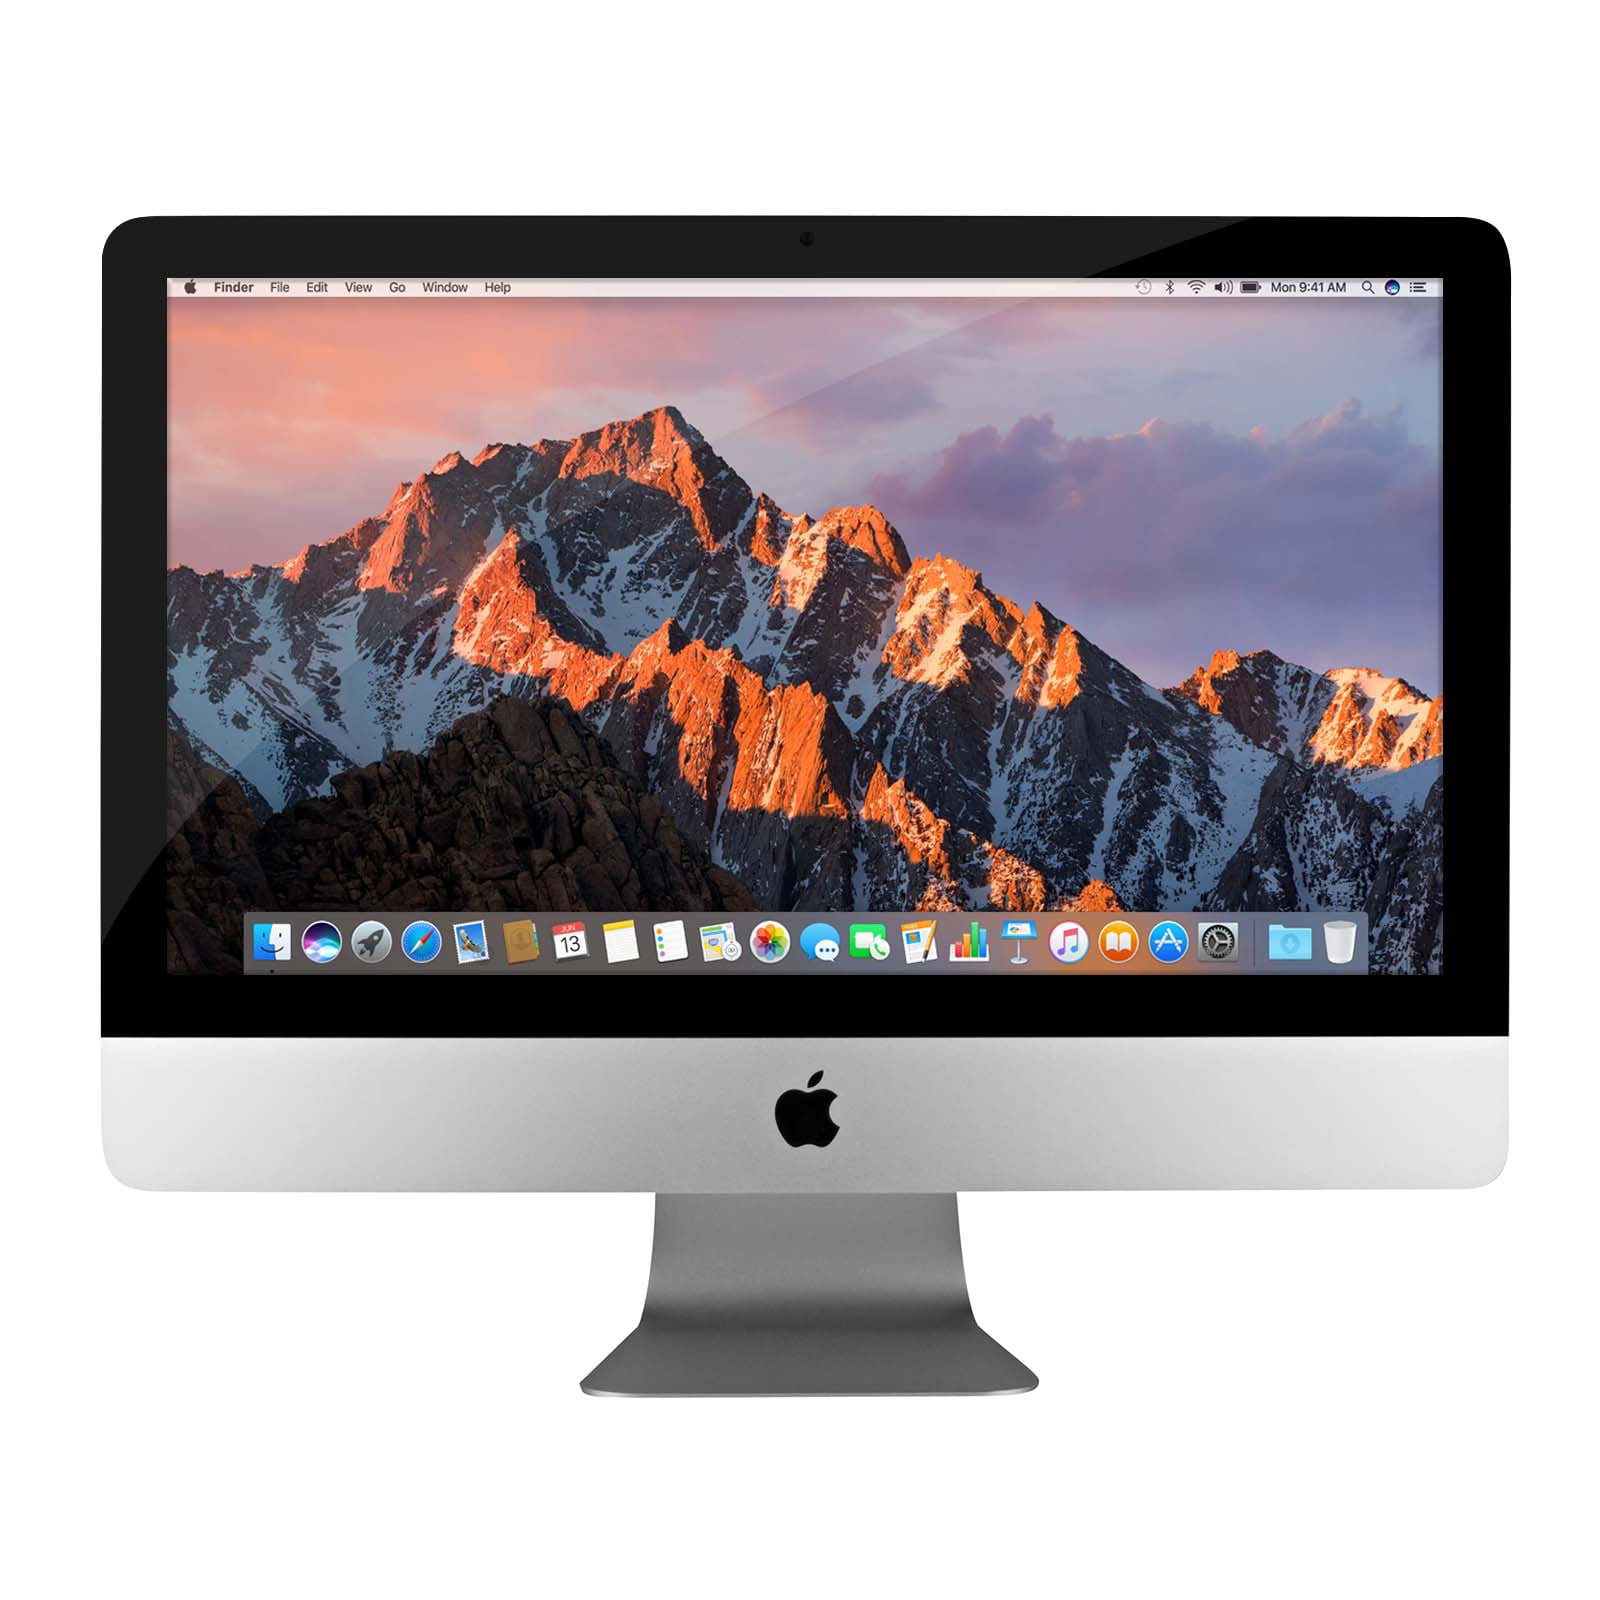 Apple iMac 21.5-inch ME087LL/A Late 2013 Silver - Intel Core i5-4570S 2